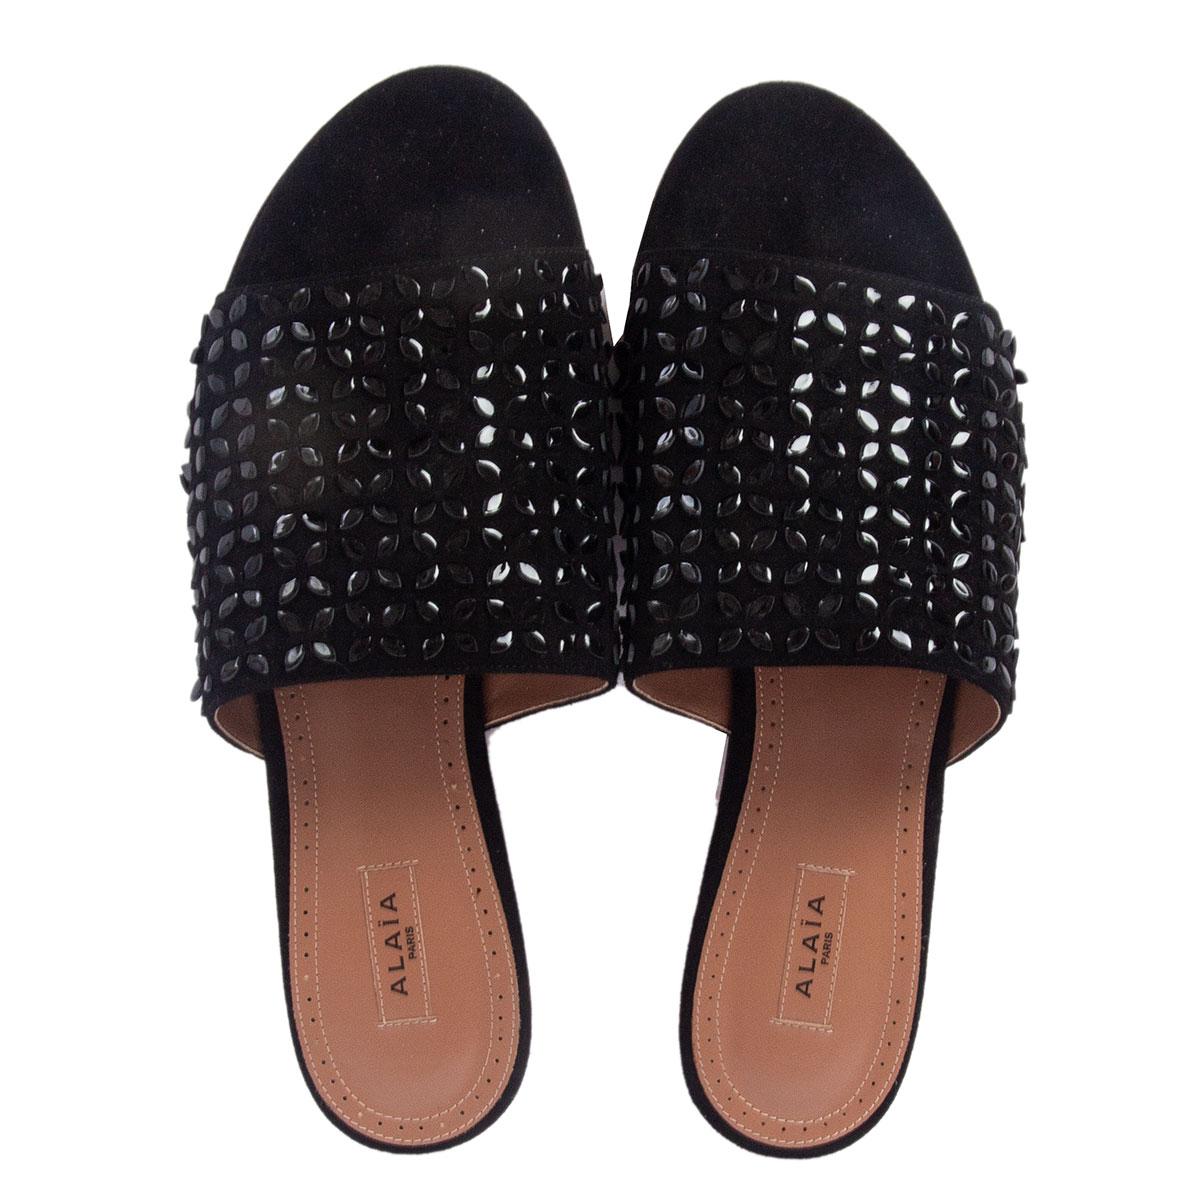 Women's ALAIA black suede & LEATHER EMBELLISHED SLIDES Sandals Shoes 38 For Sale